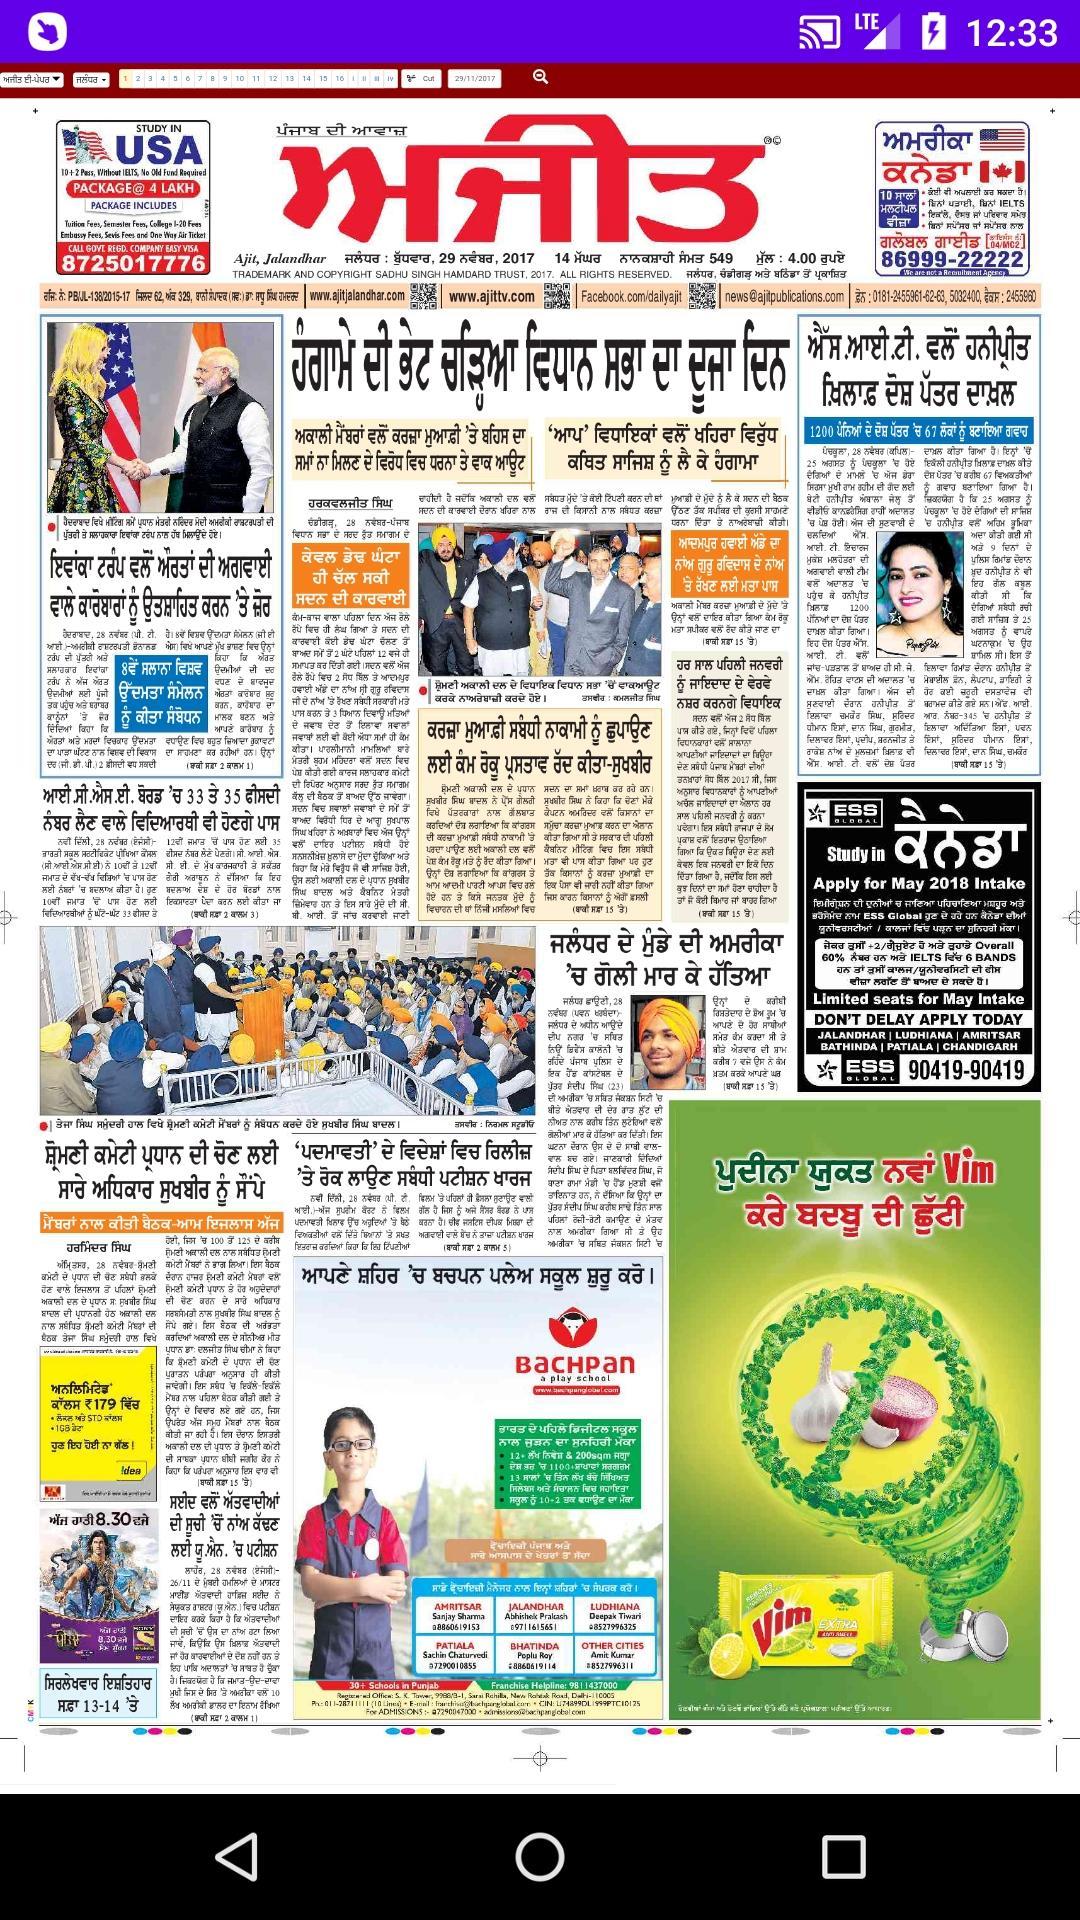 Punjabi News Papers - ePapers